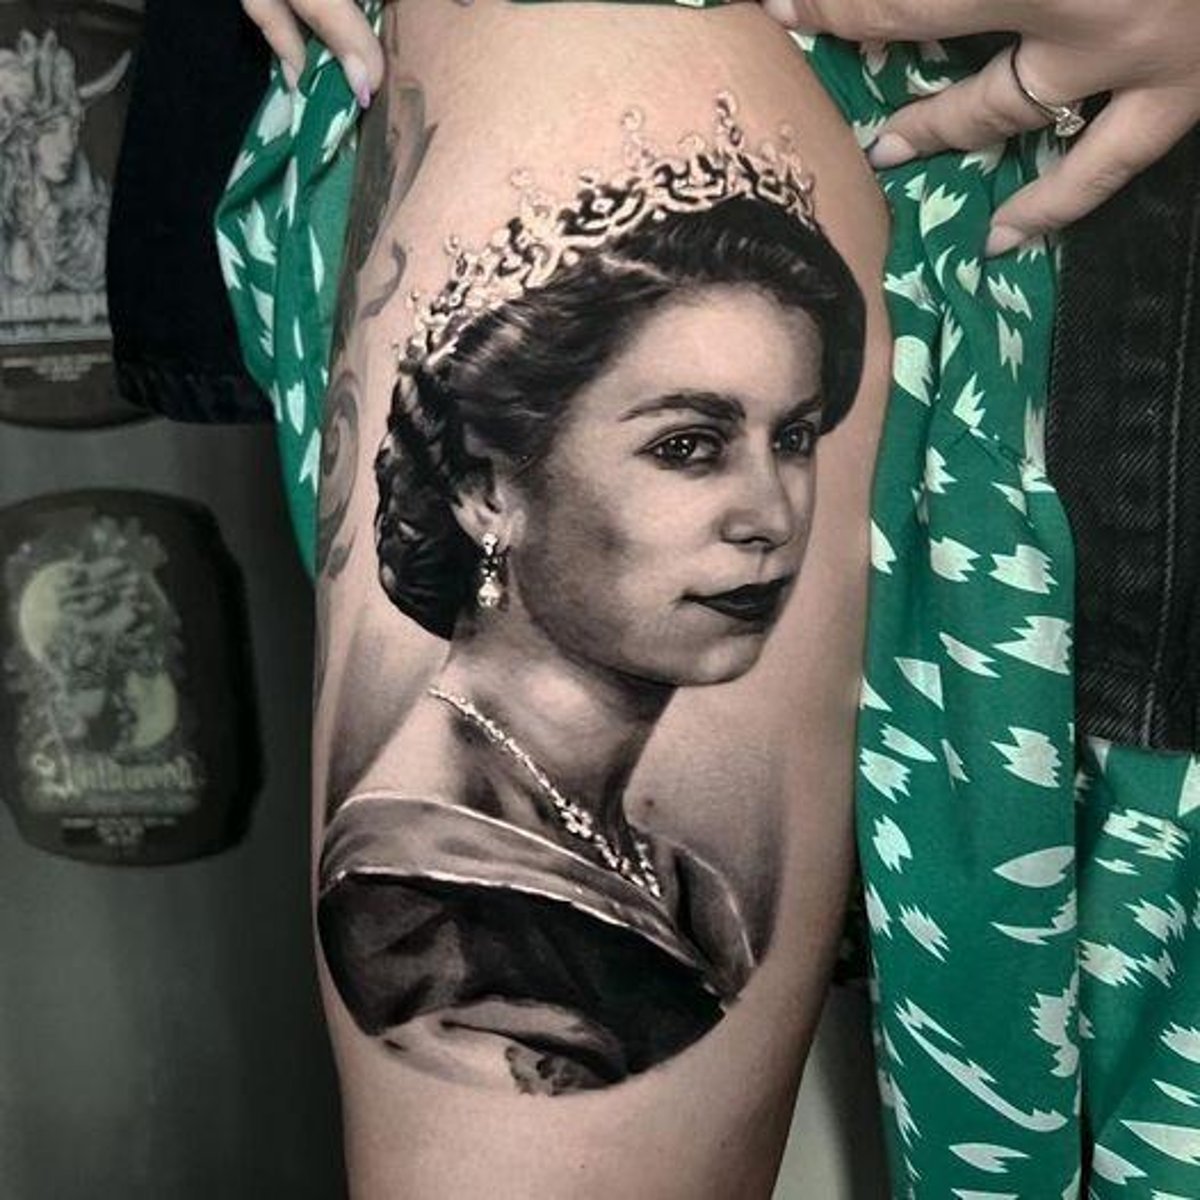 Chesterfield studio helps royal fan honour Queen Elizabeth with 